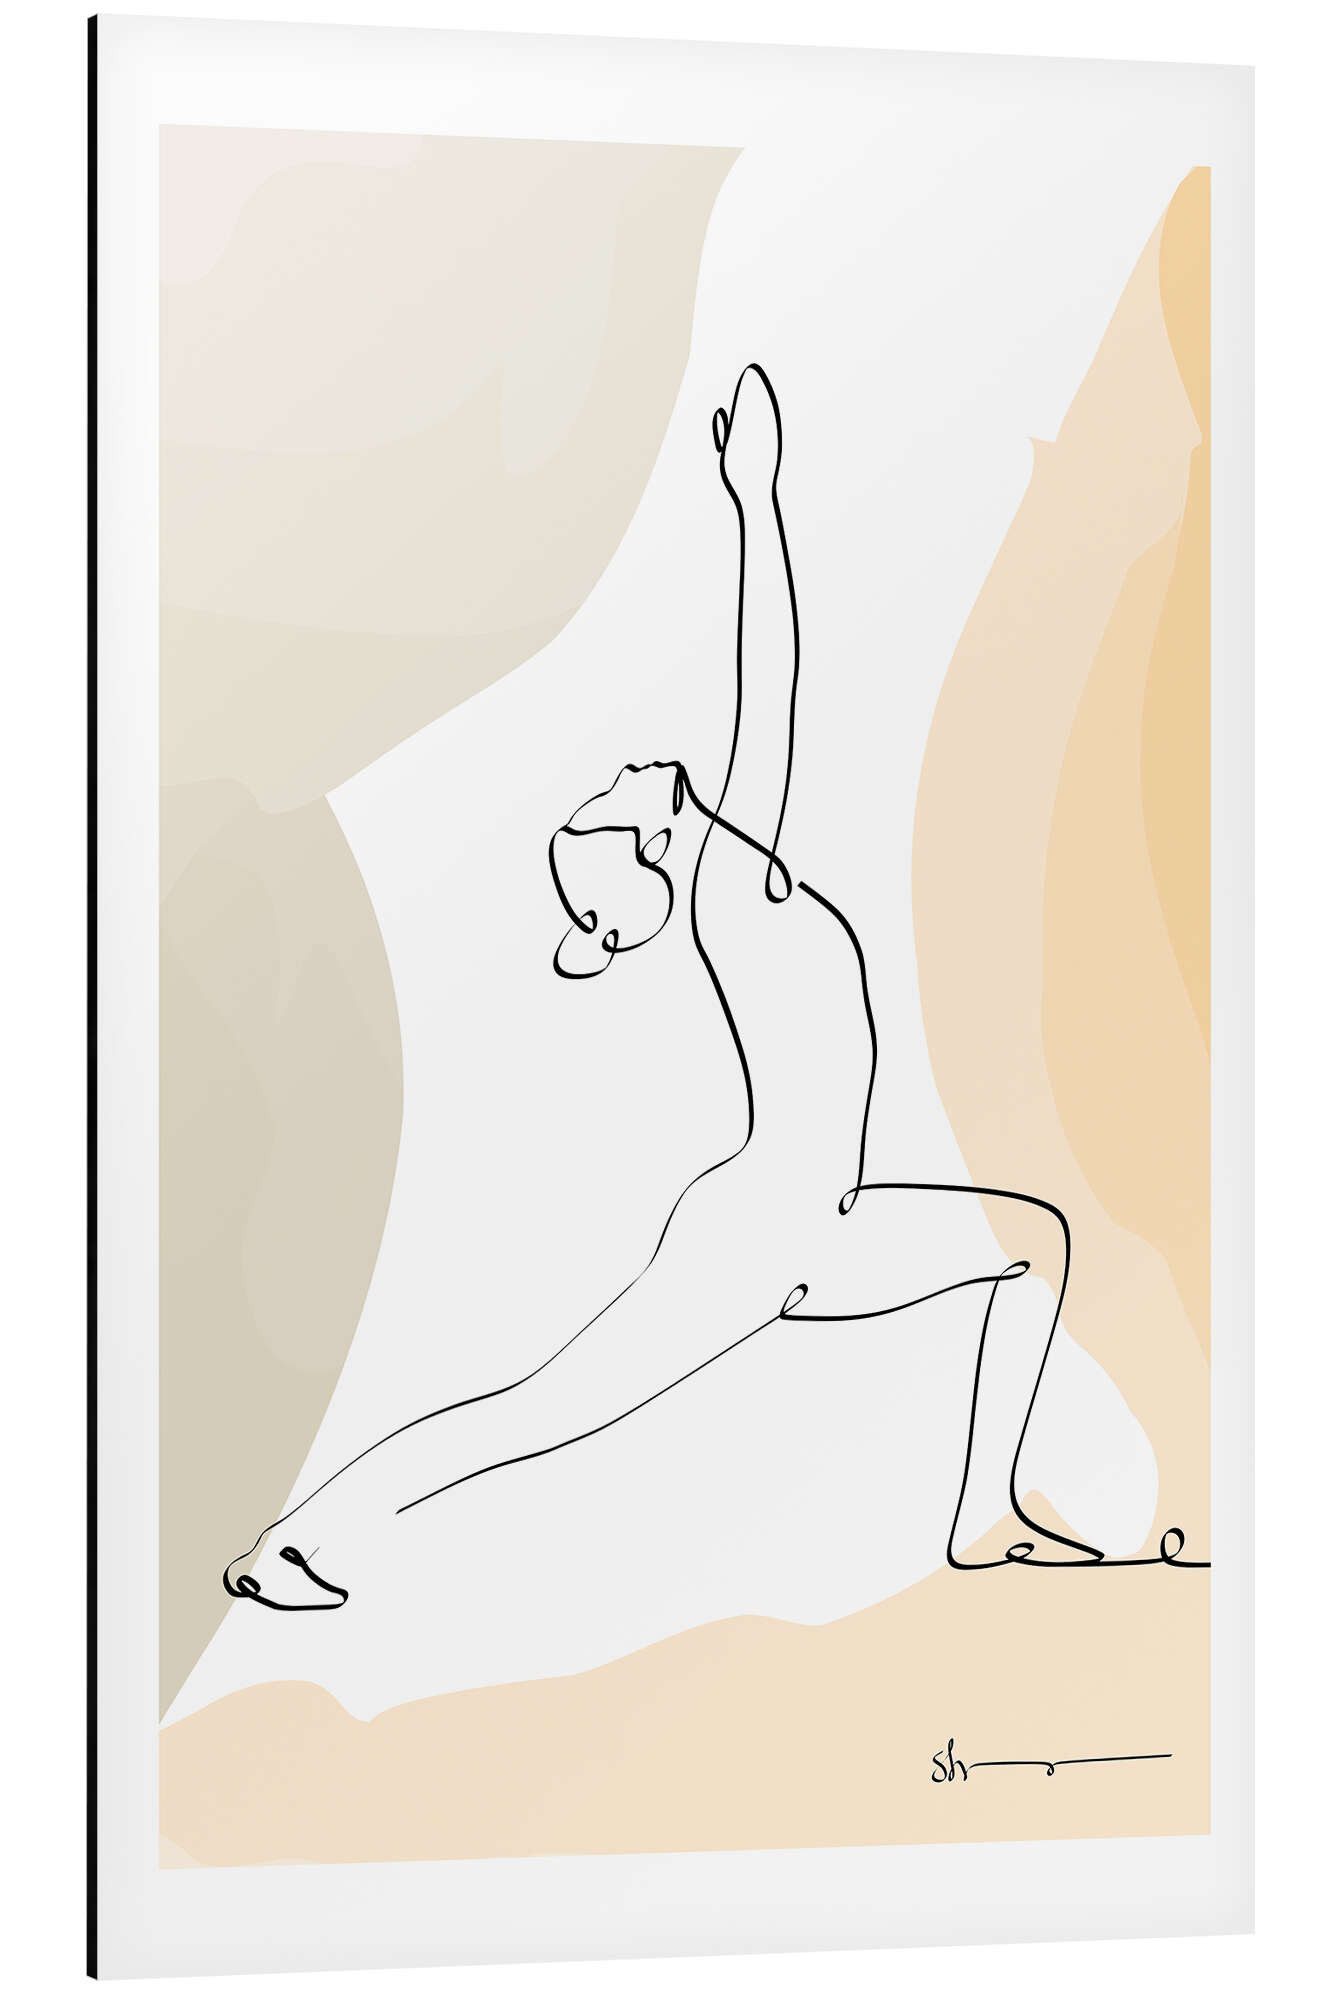 Posterlounge Alu-Dibond-Druck Yoga In Art, Krieger Pose I (Virabhadrasana), Fitnessraum Minimalistisch Grafikdesign